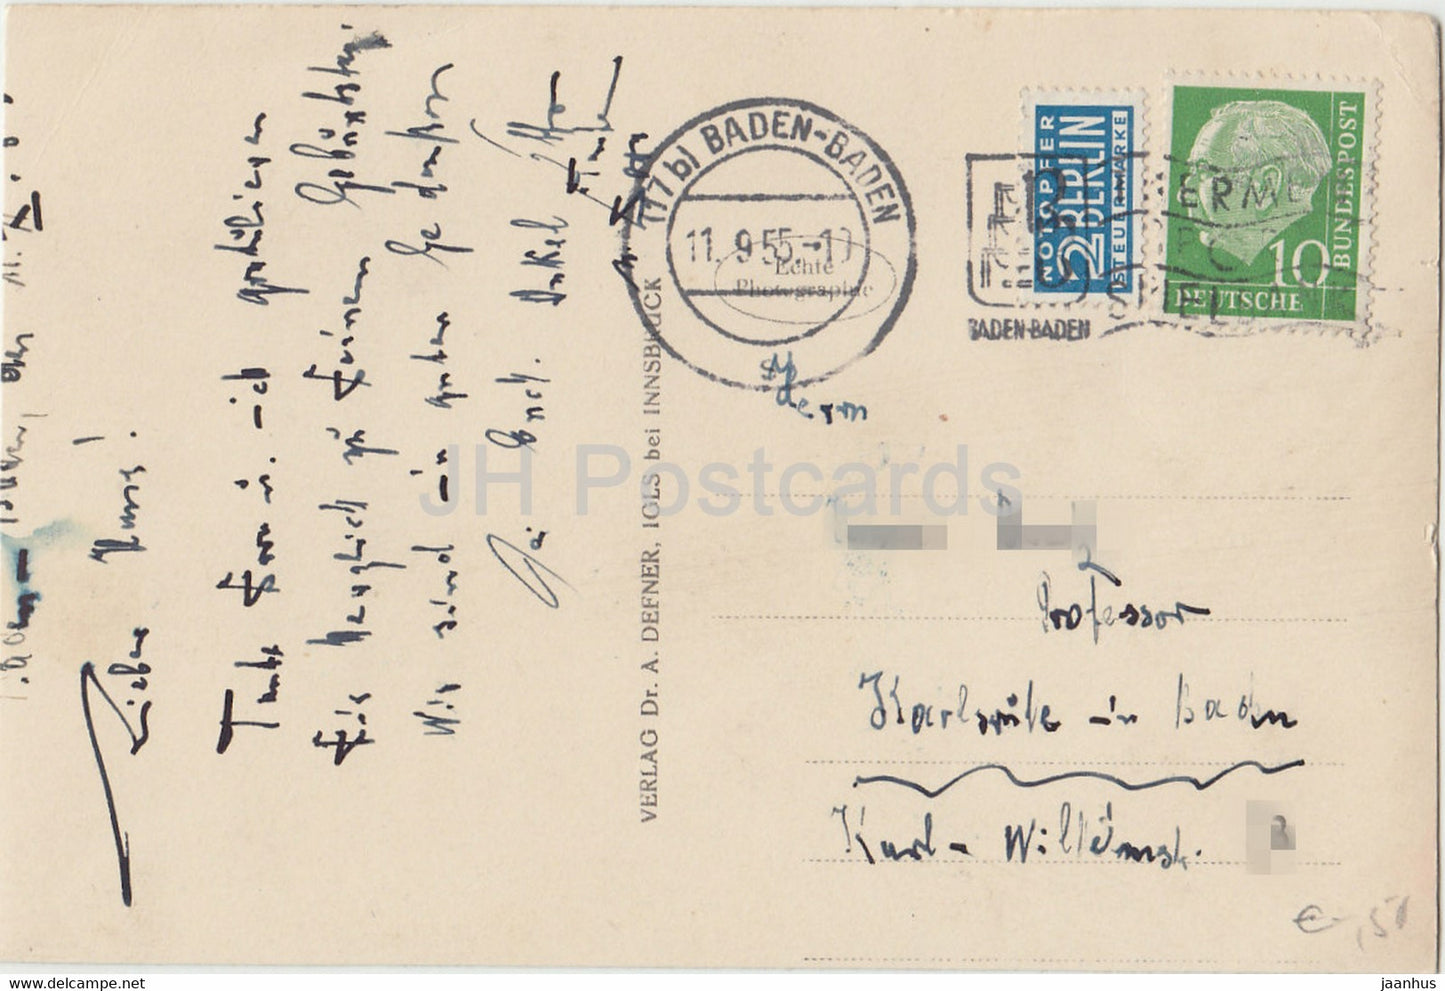 Waldweg - old postcard - 1955 - Germany - used